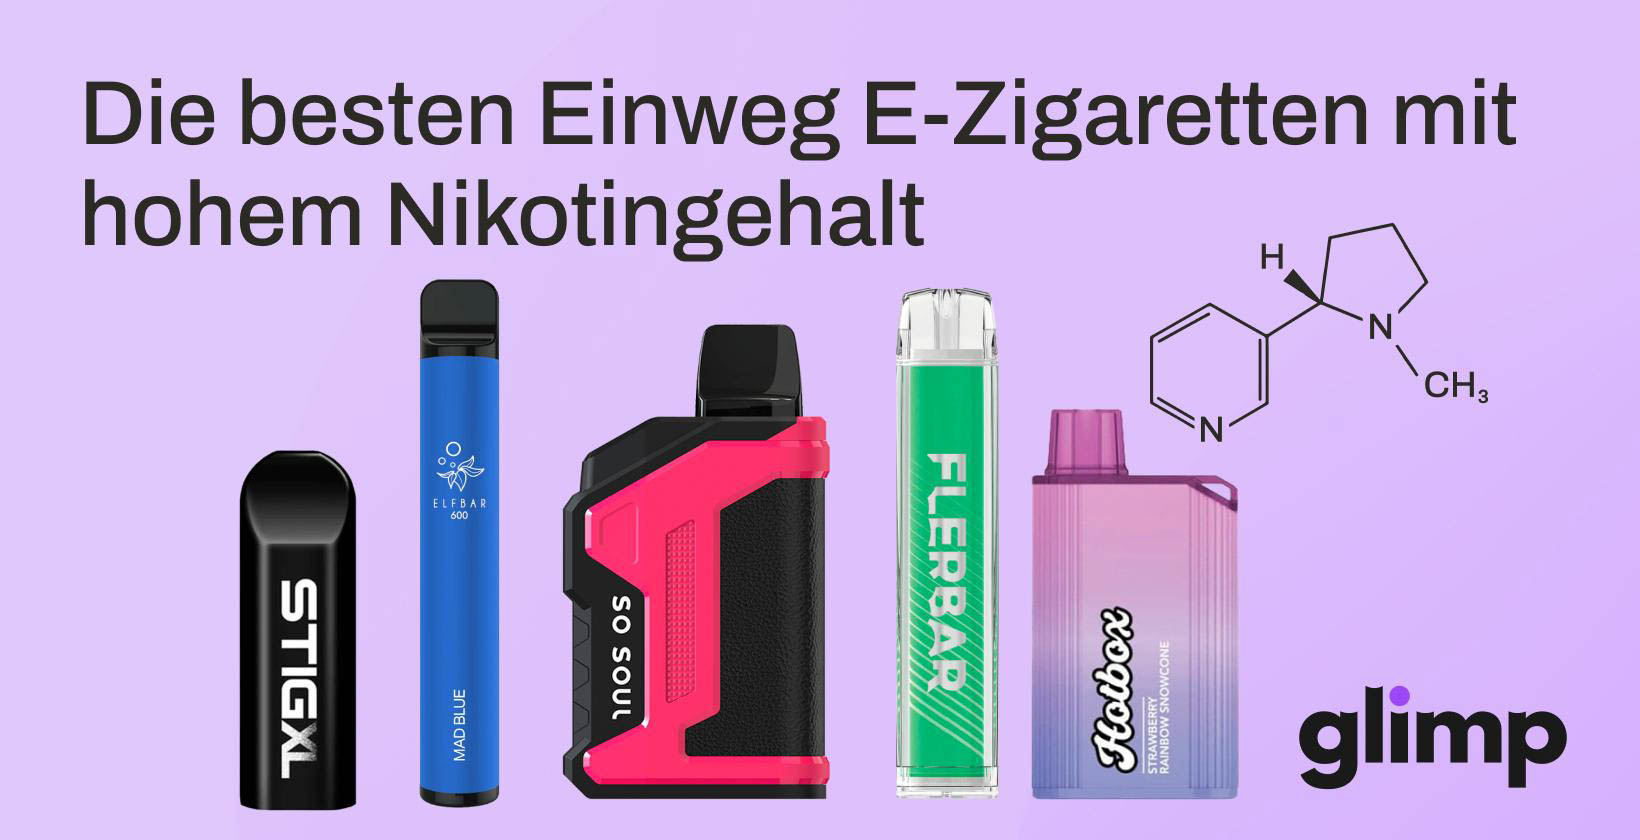 https://glimp.de/wp-content/uploads/e-zigarette/einweg-e-zigarette/Die-besten-Einweg-E-Zigaretten-mit-hohem-Nikotingehalt.jpg